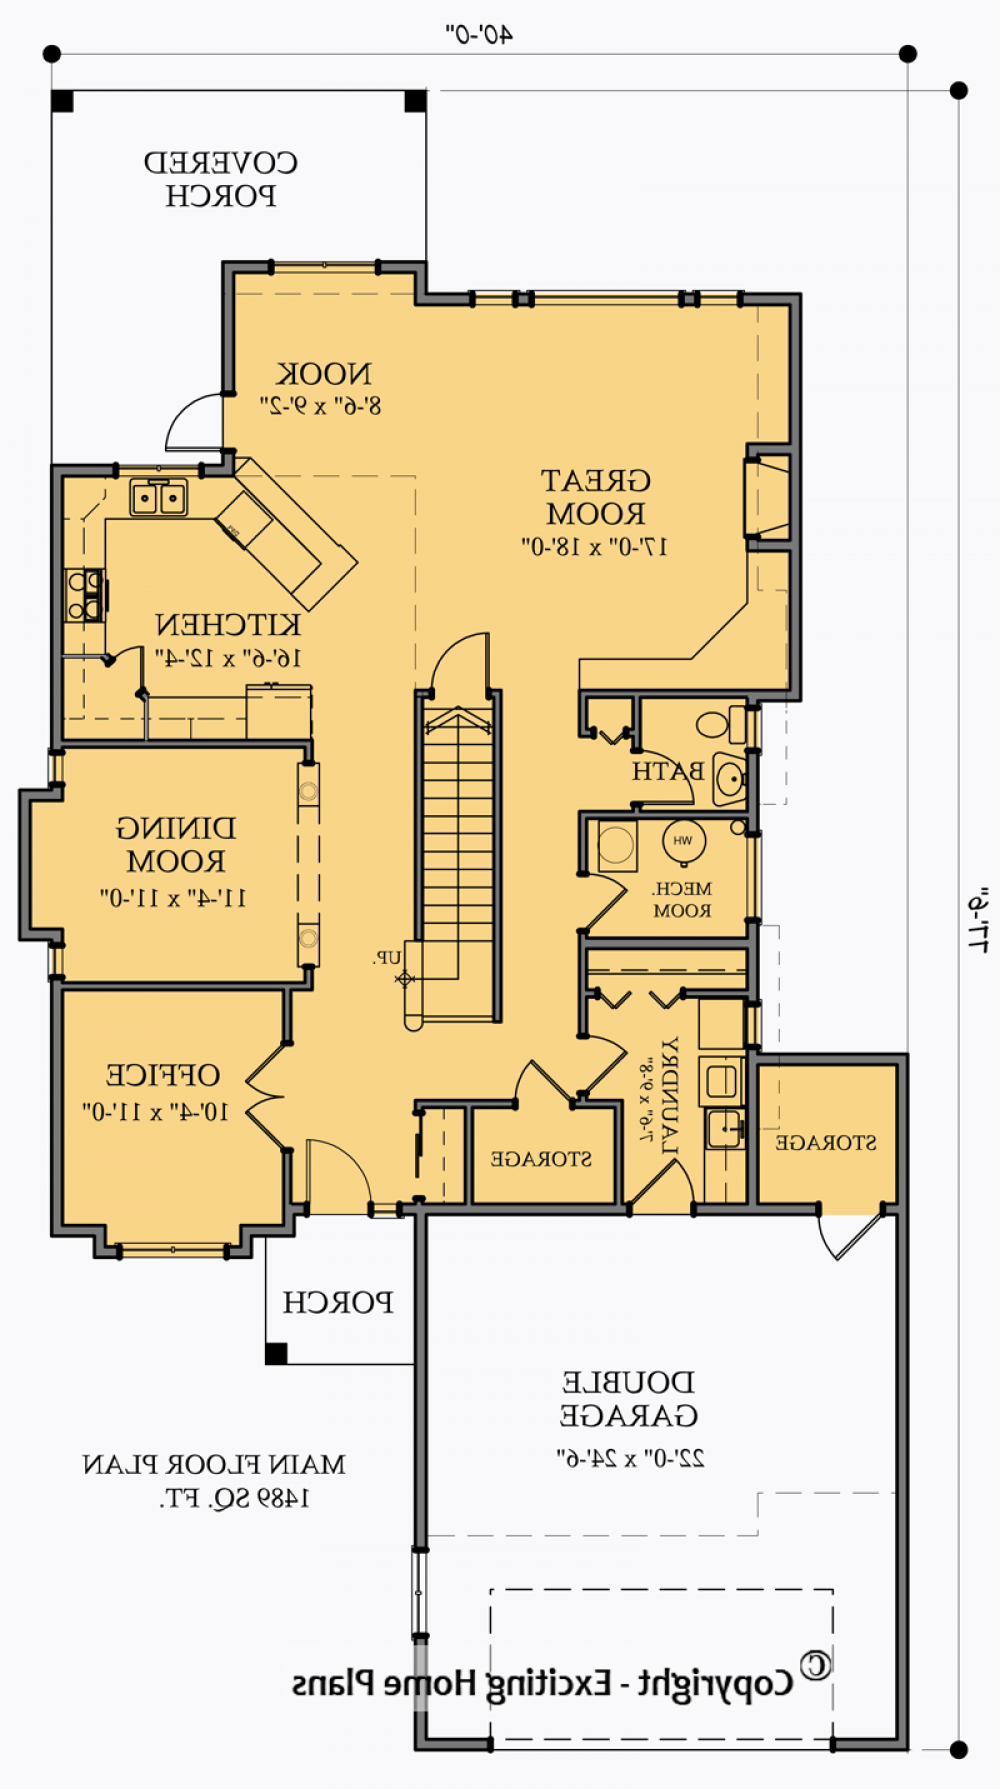 House Plan E1007-10 Main Floor Plan REVERSE